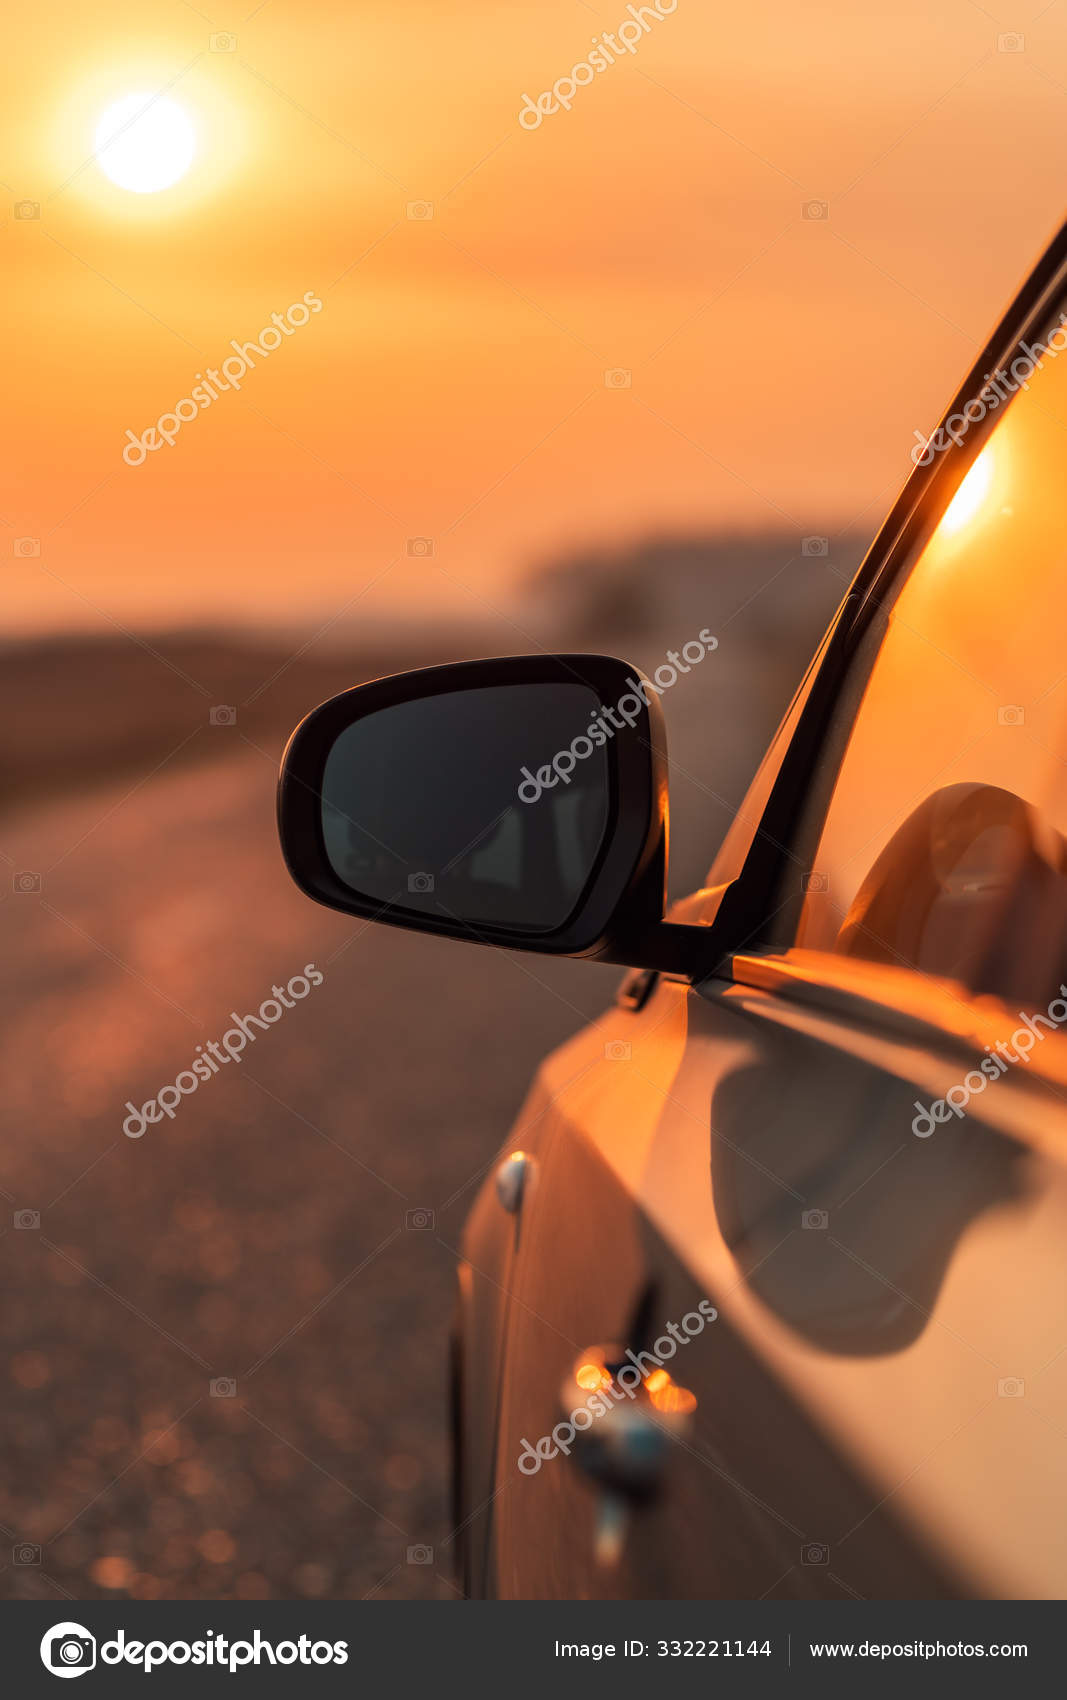 https://st3.depositphotos.com/1006472/33222/i/1600/depositphotos_332221144-stock-photo-side-view-mirror-of-car.jpg